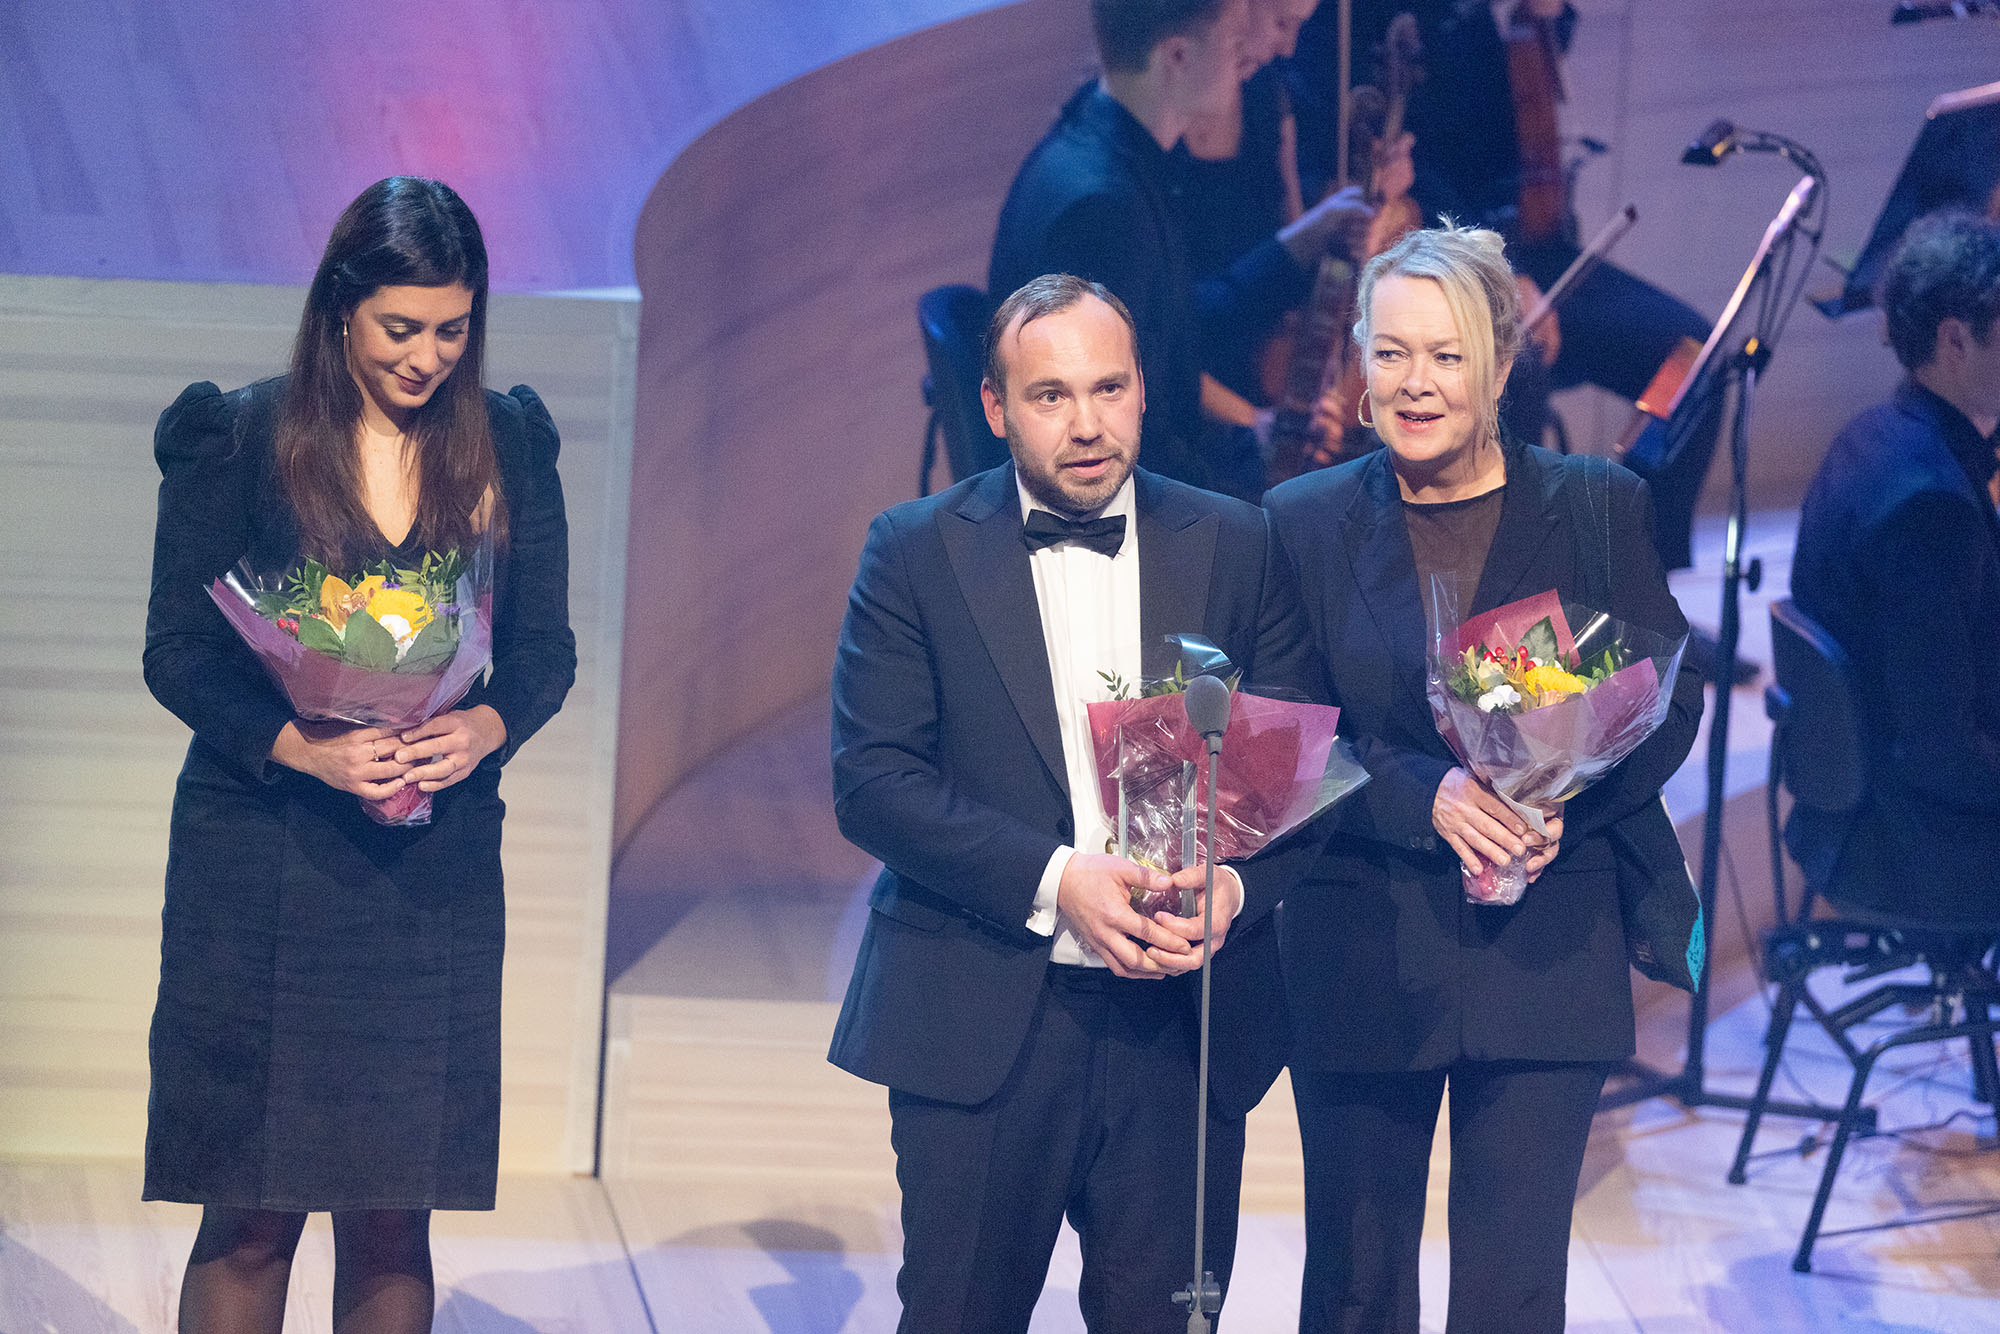 Icelandic Film, Lamb, Wins 2022 Nordic Council Film Prize